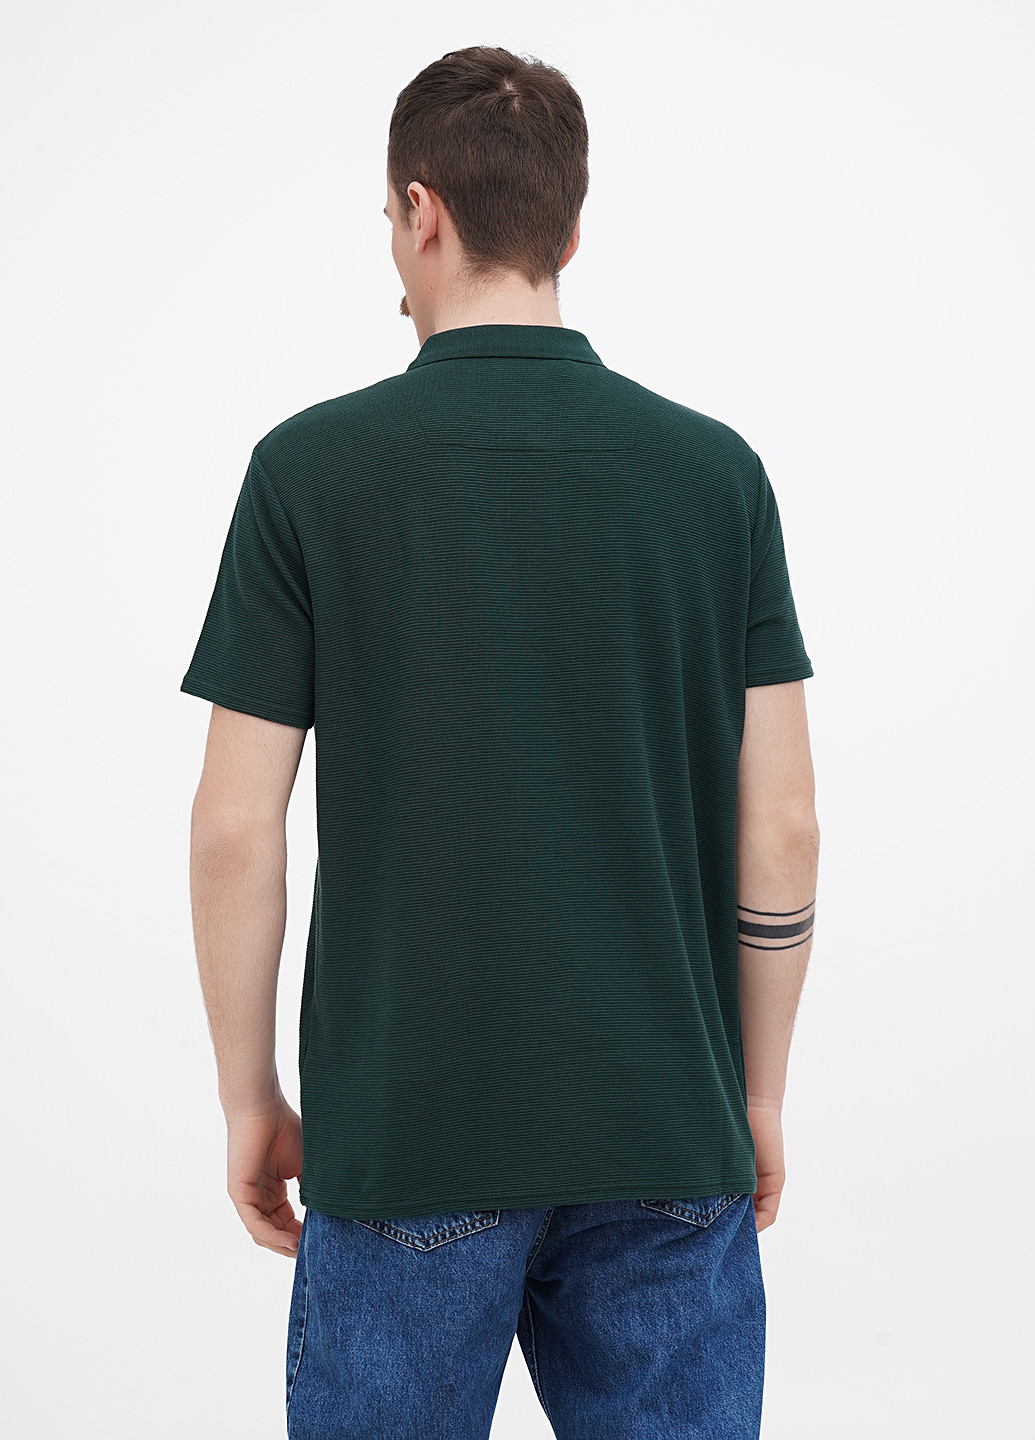 Темно-зеленая футболка-поло для мужчин Broken Standard однотонная